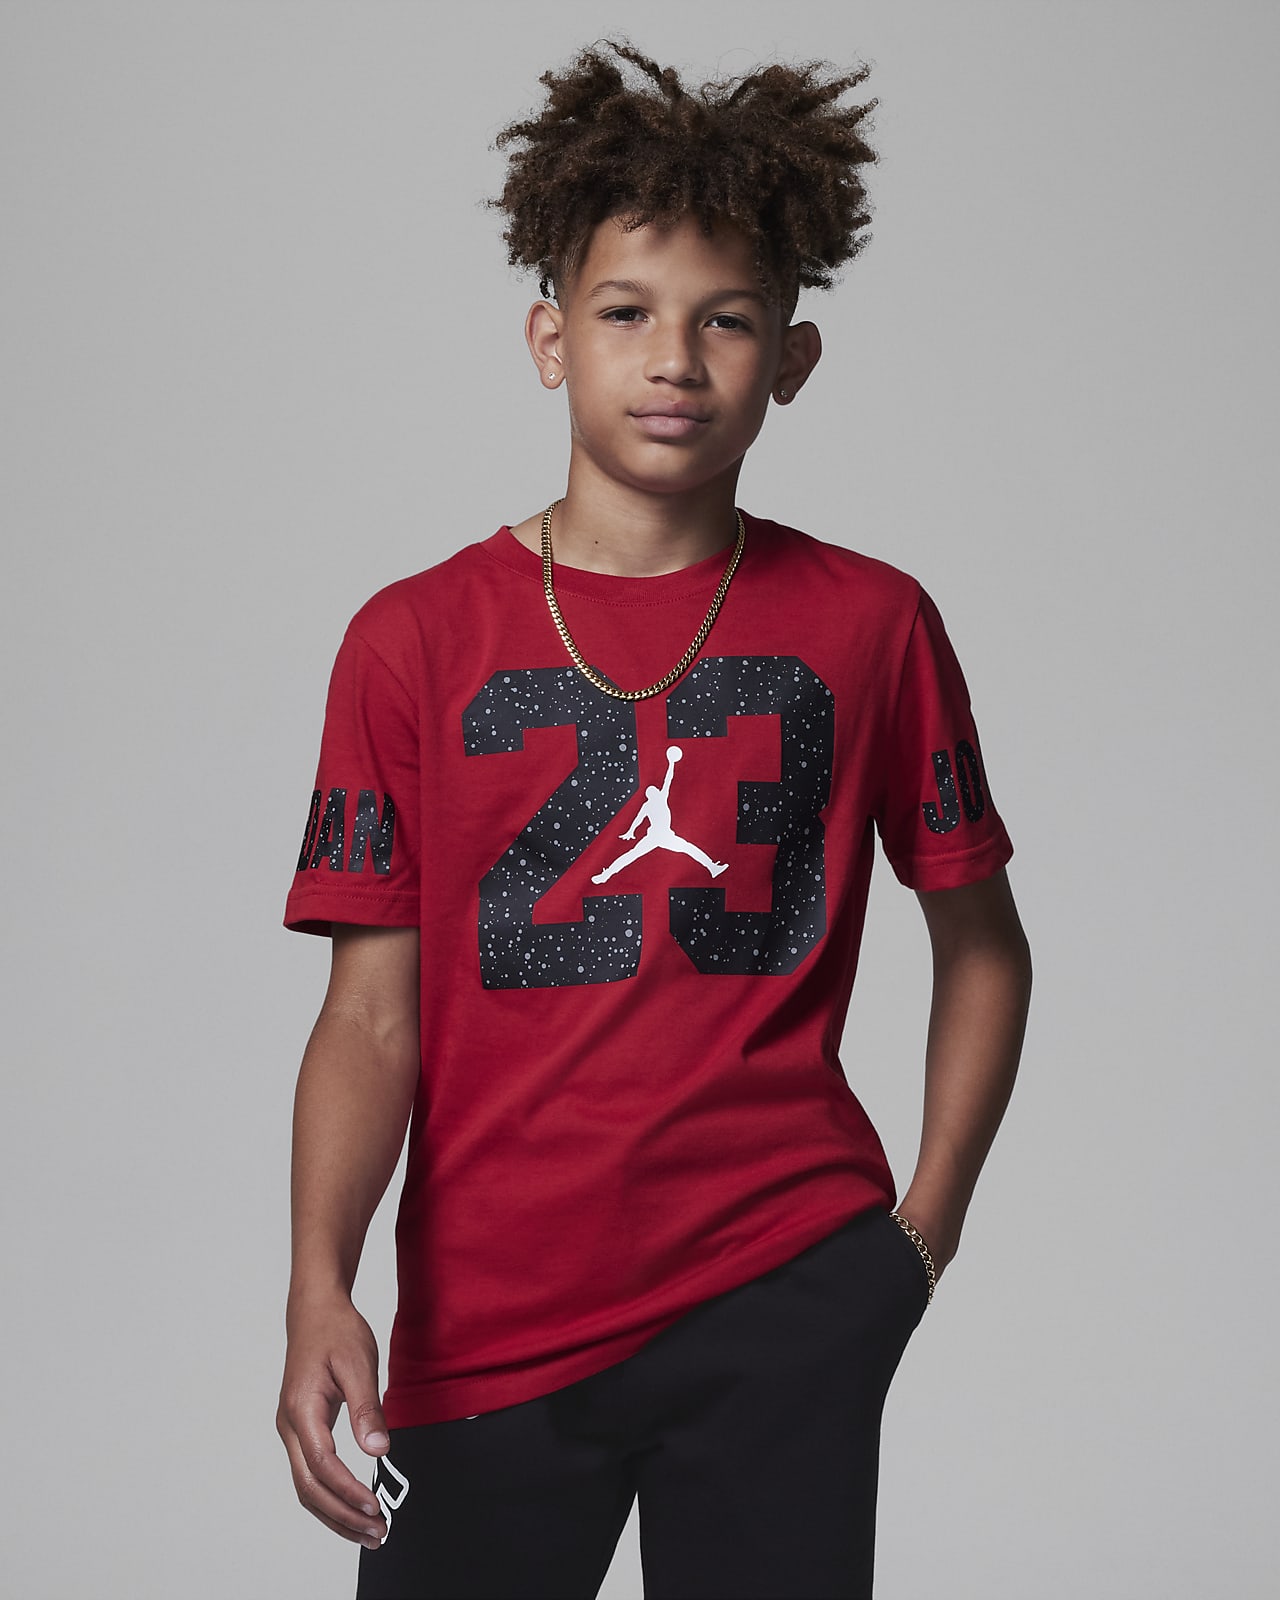 Plettet Jordan 23-T-shirt til større børn